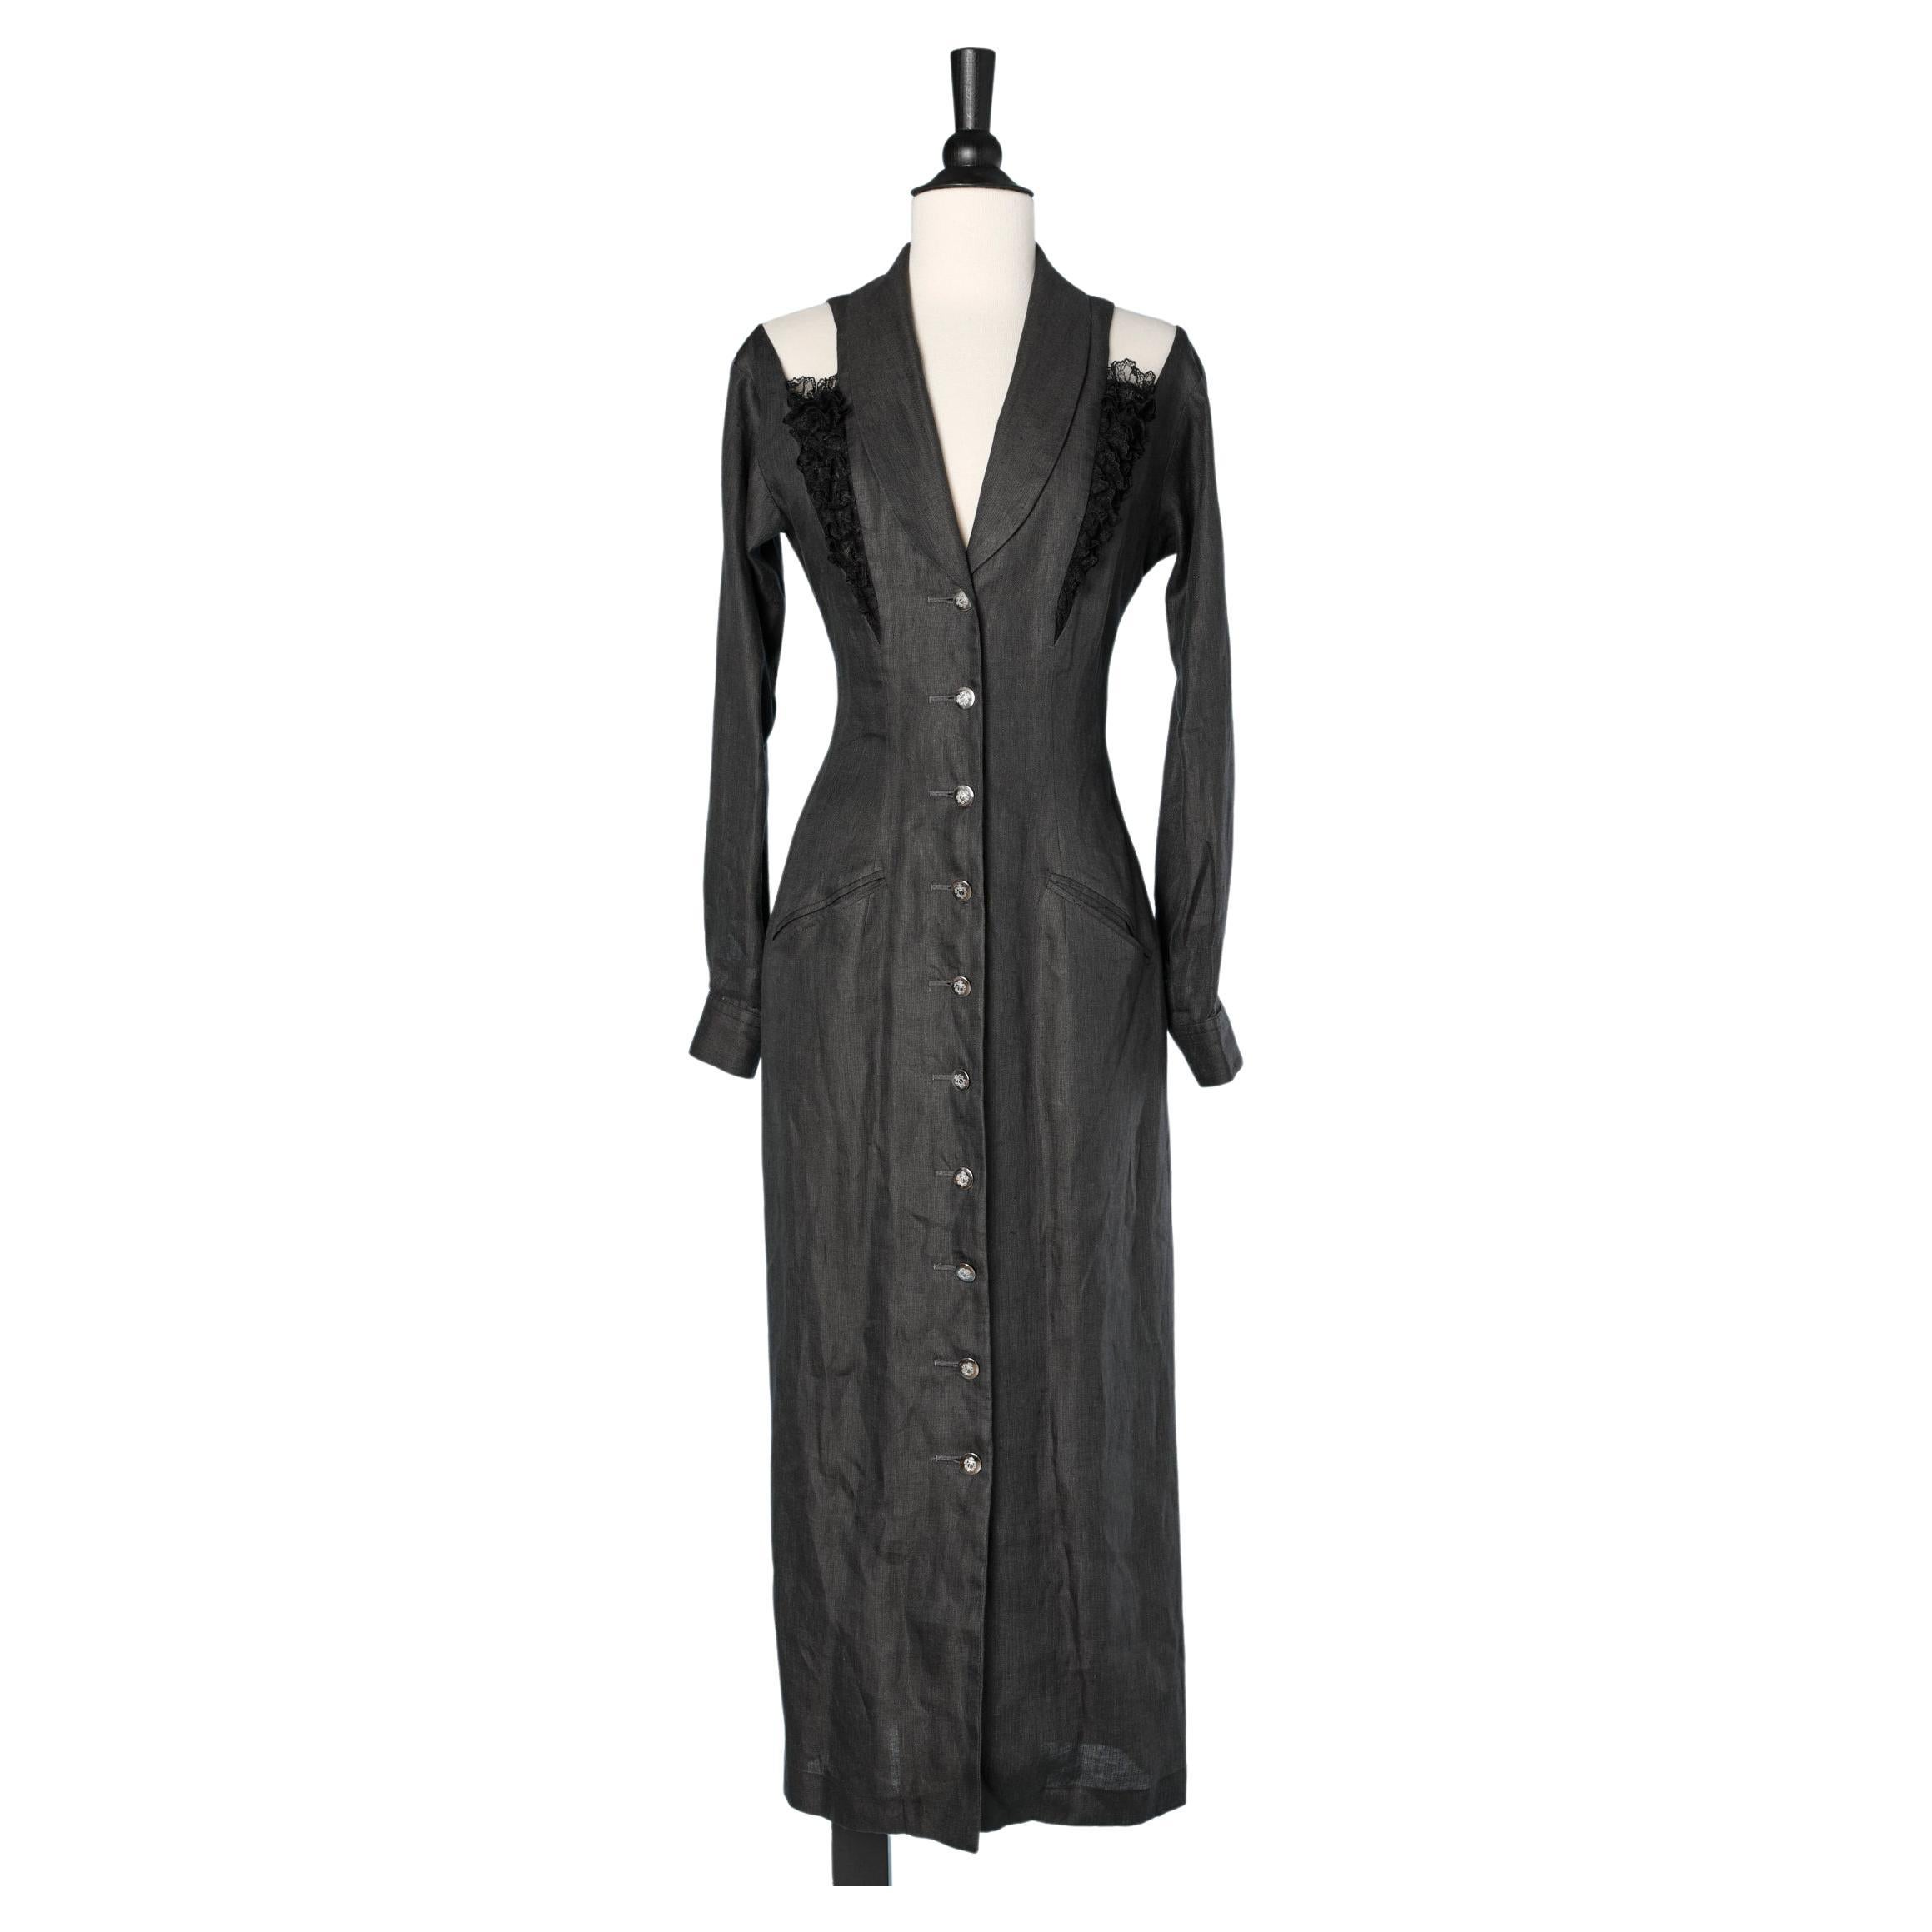 Black linen dress with black lace details Chantal Thomass SS1992